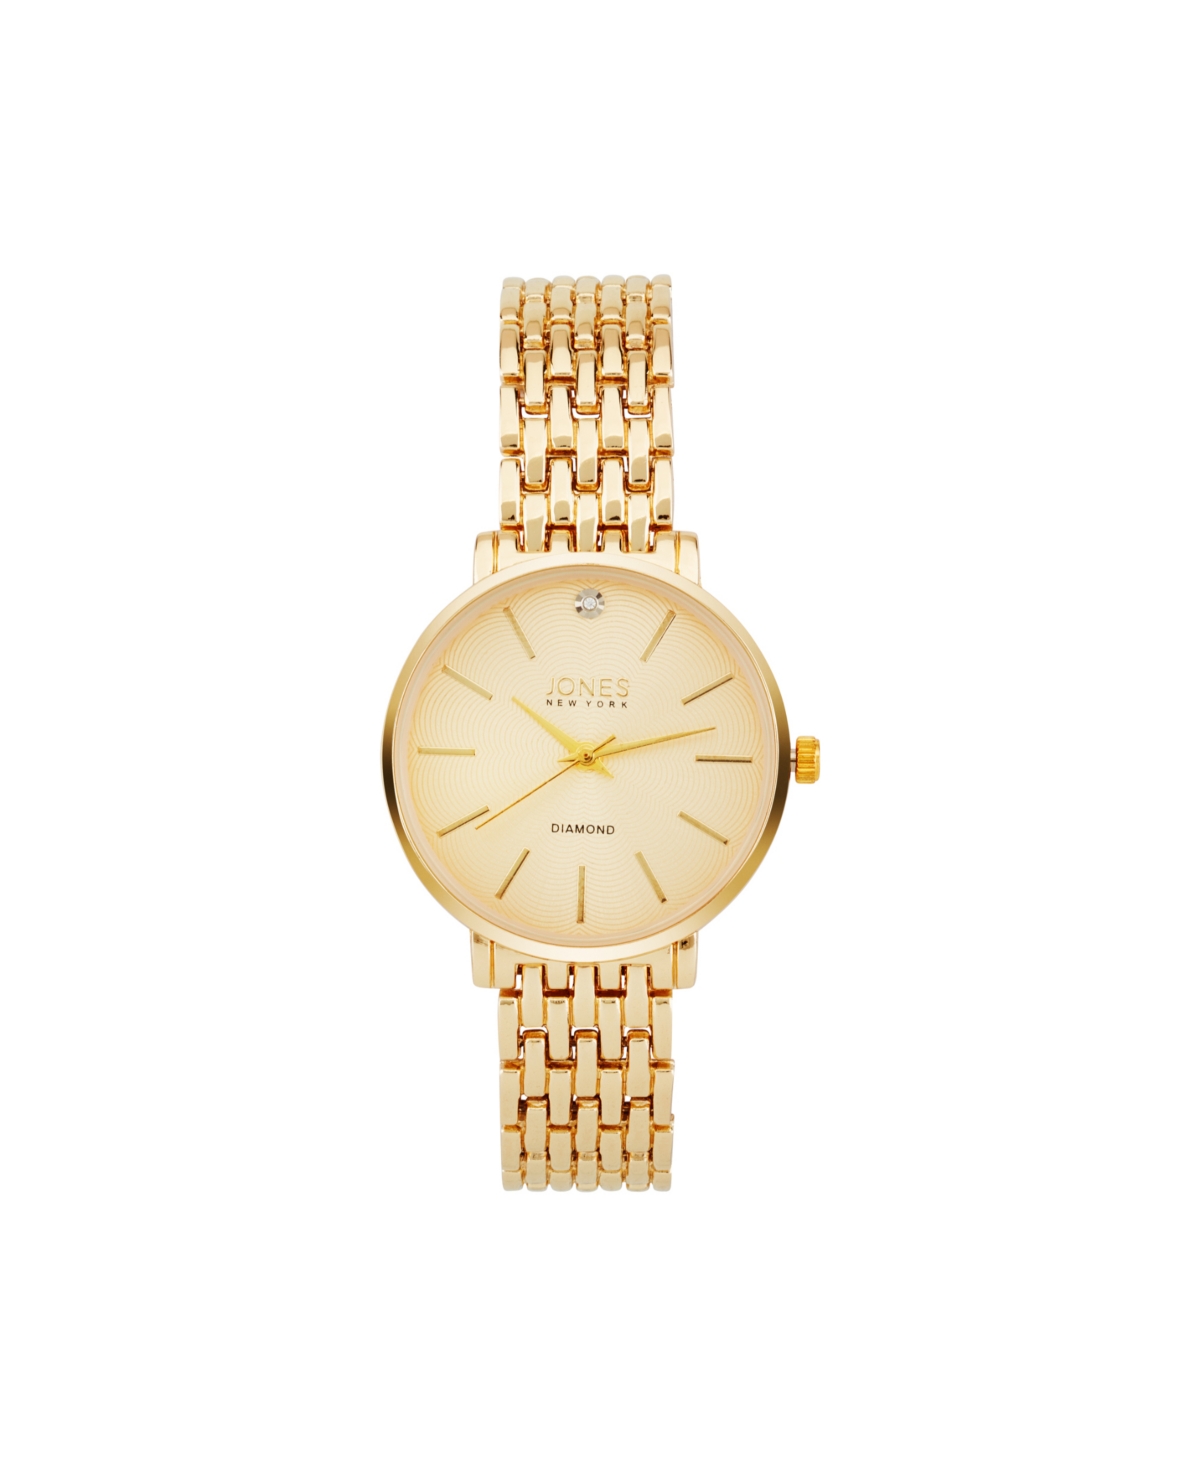 Women's Gold-Tone Metal Bracelet Watch 34mm - Champagne Gold-Tone, Gold-Tone